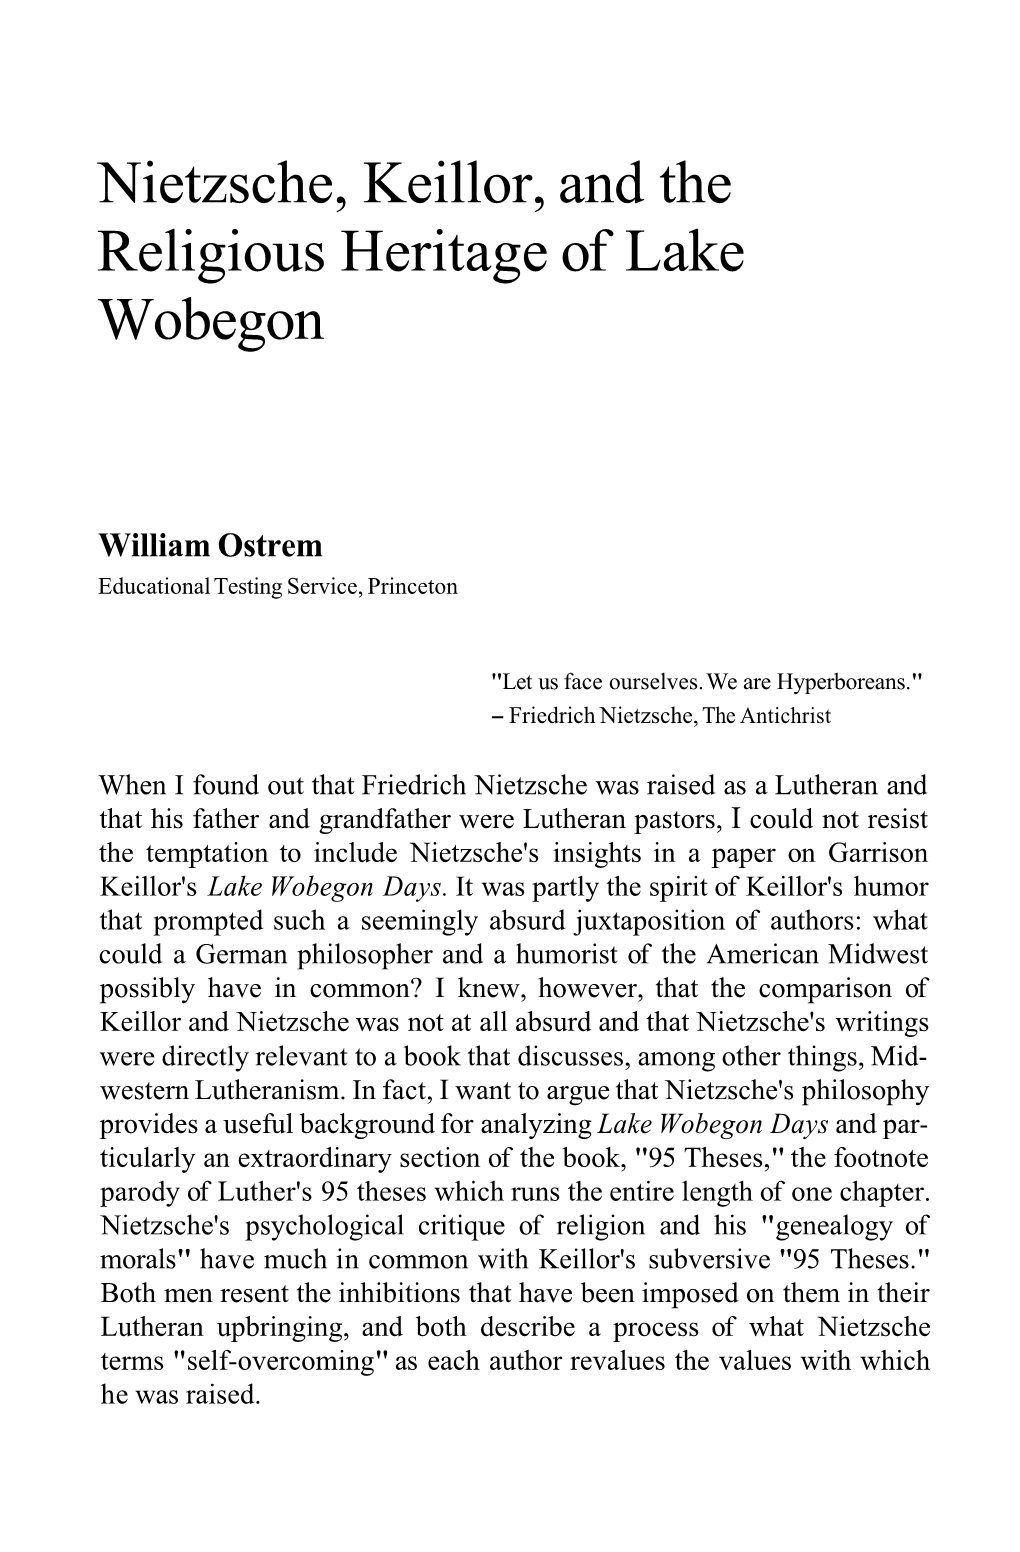 Nietzsche, Keillor, and the Religious Heritage of Lake Wobegon